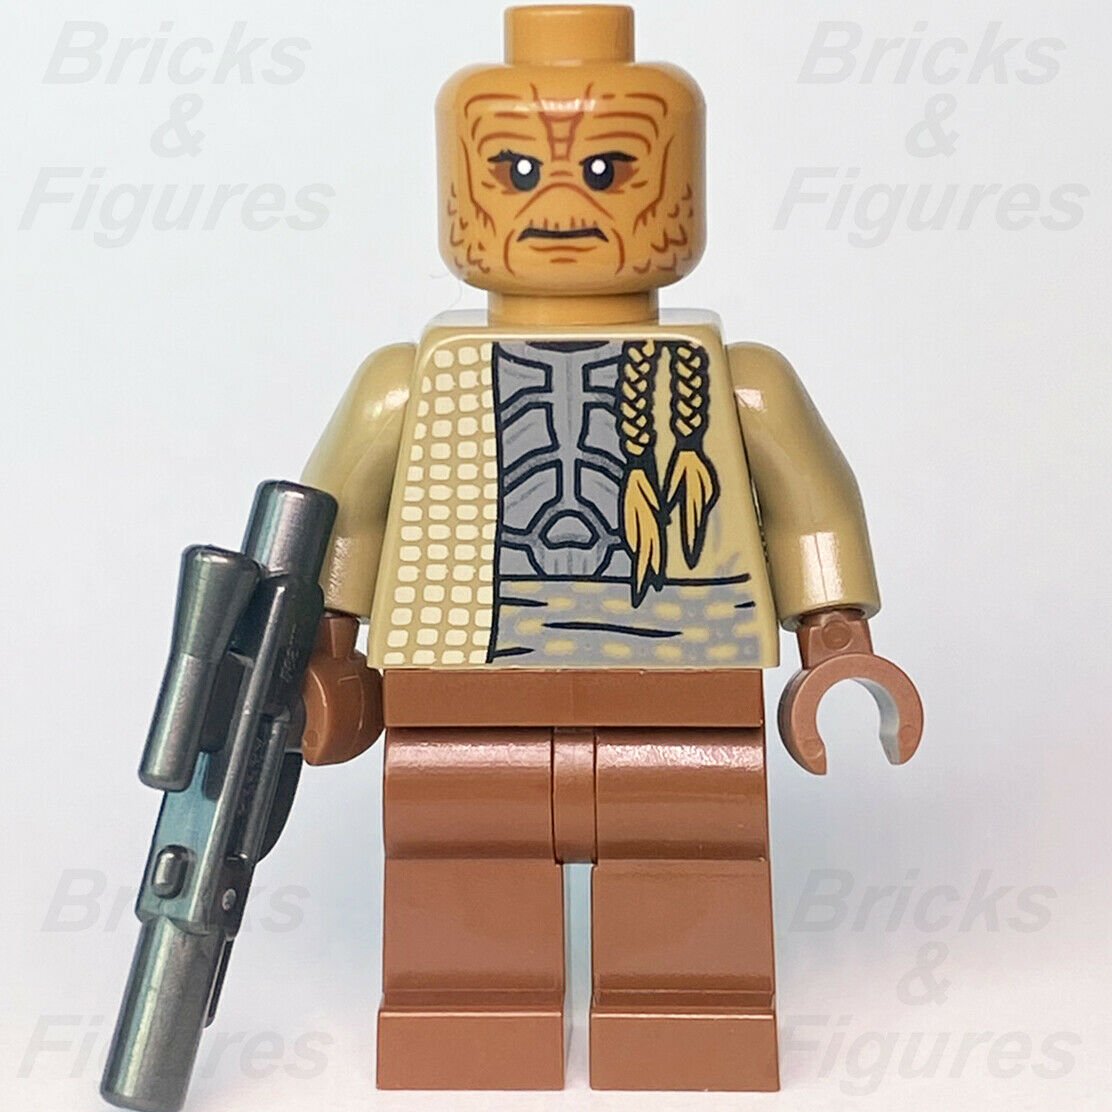 New Star Wars LEGO Weequay Guard The Book of Boba Fett Minifigure 75326 sw1197 - Bricks & Figures